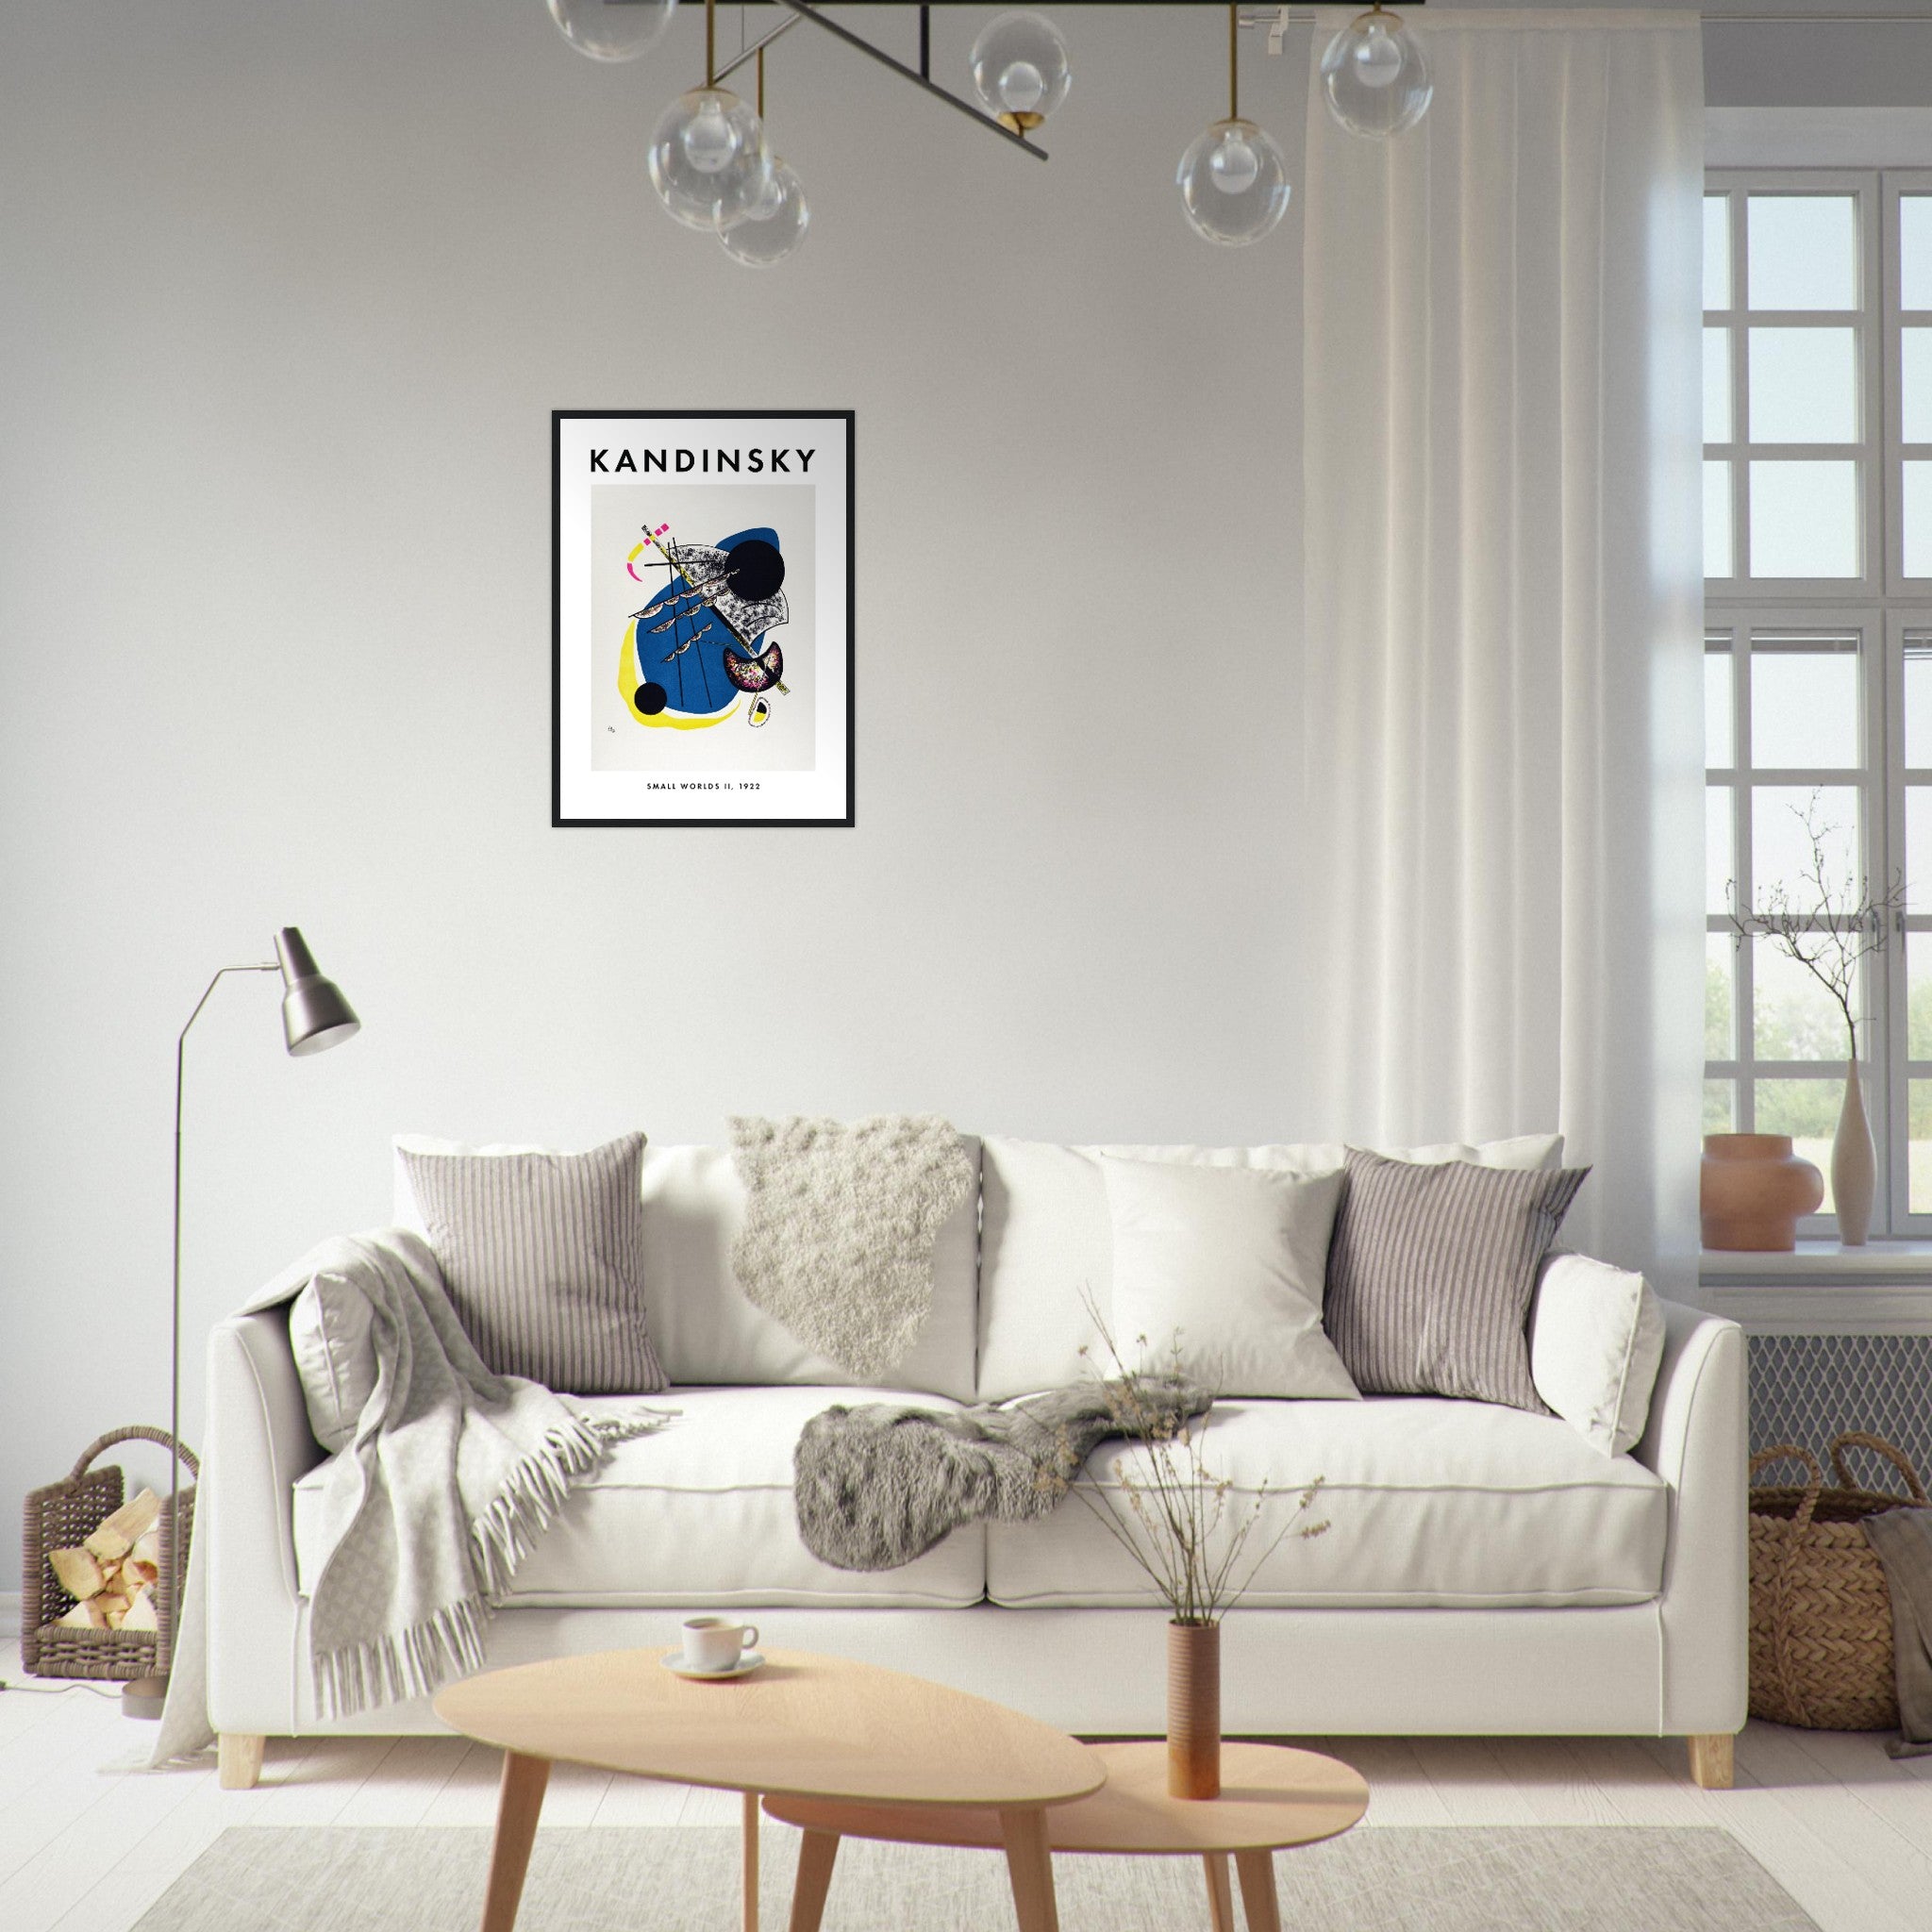 Kandinsky - Small Worlds II Poster